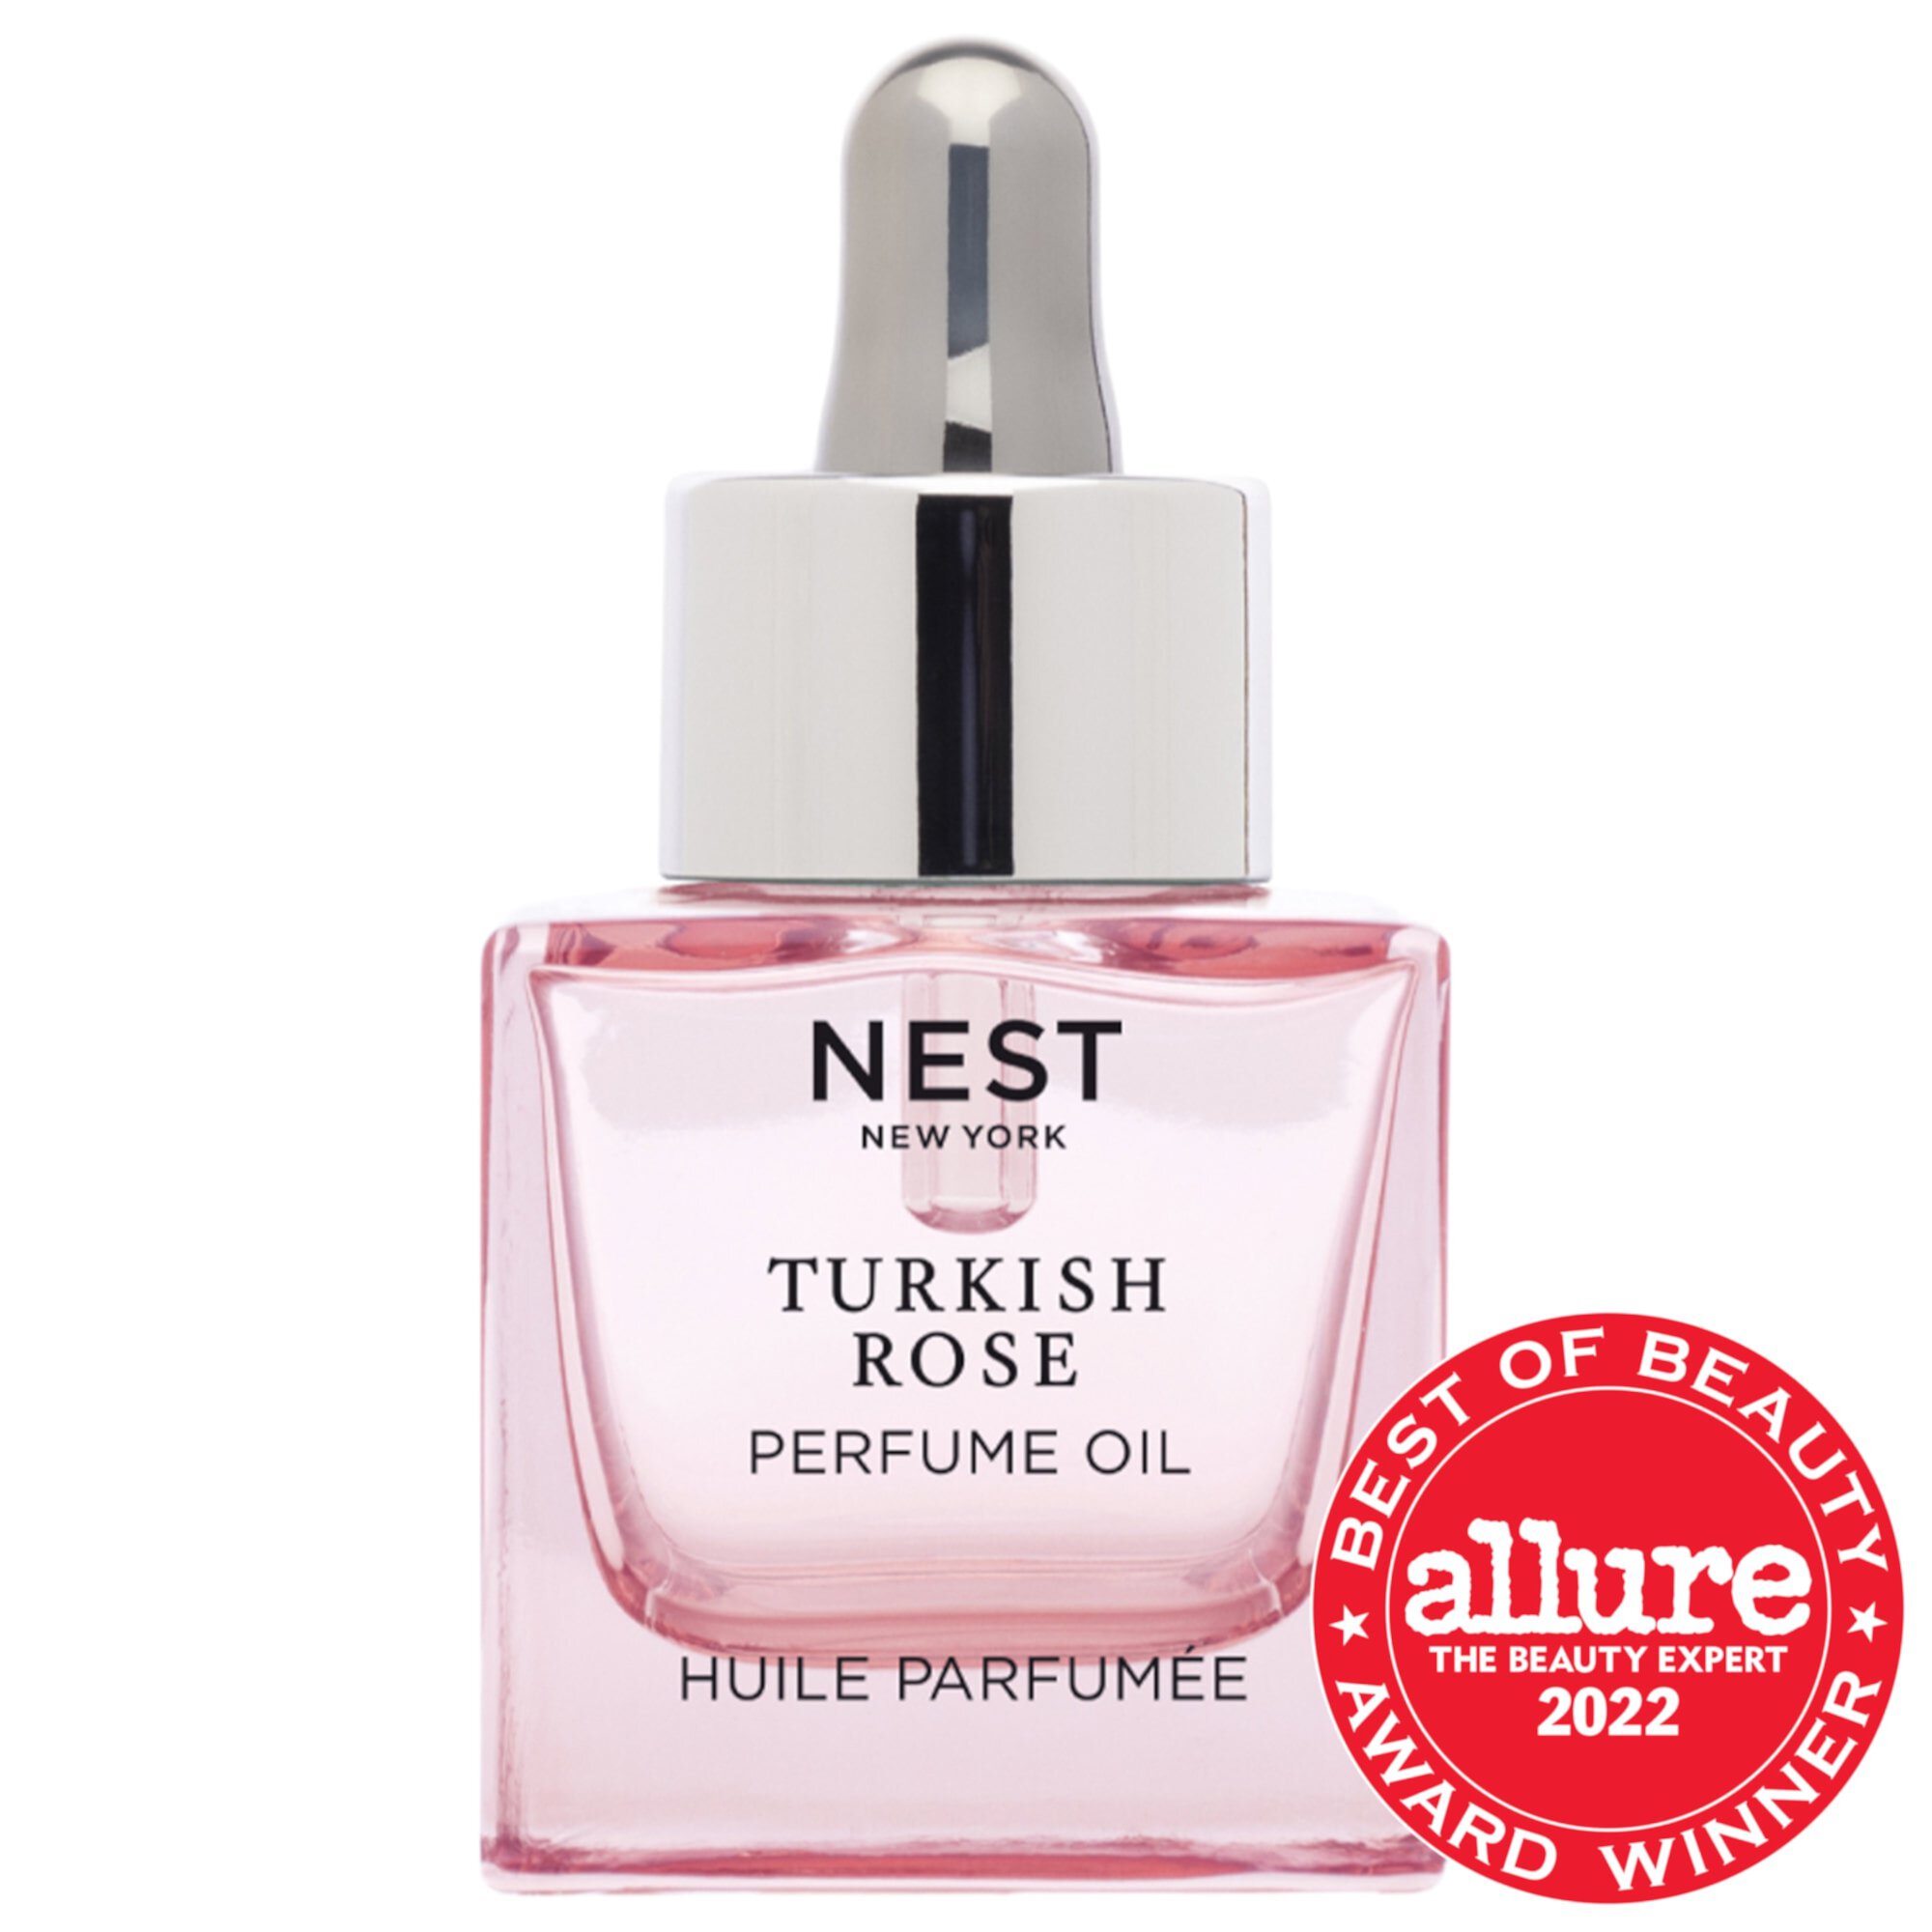 Turkish Rose Perfume Oil Nest New York